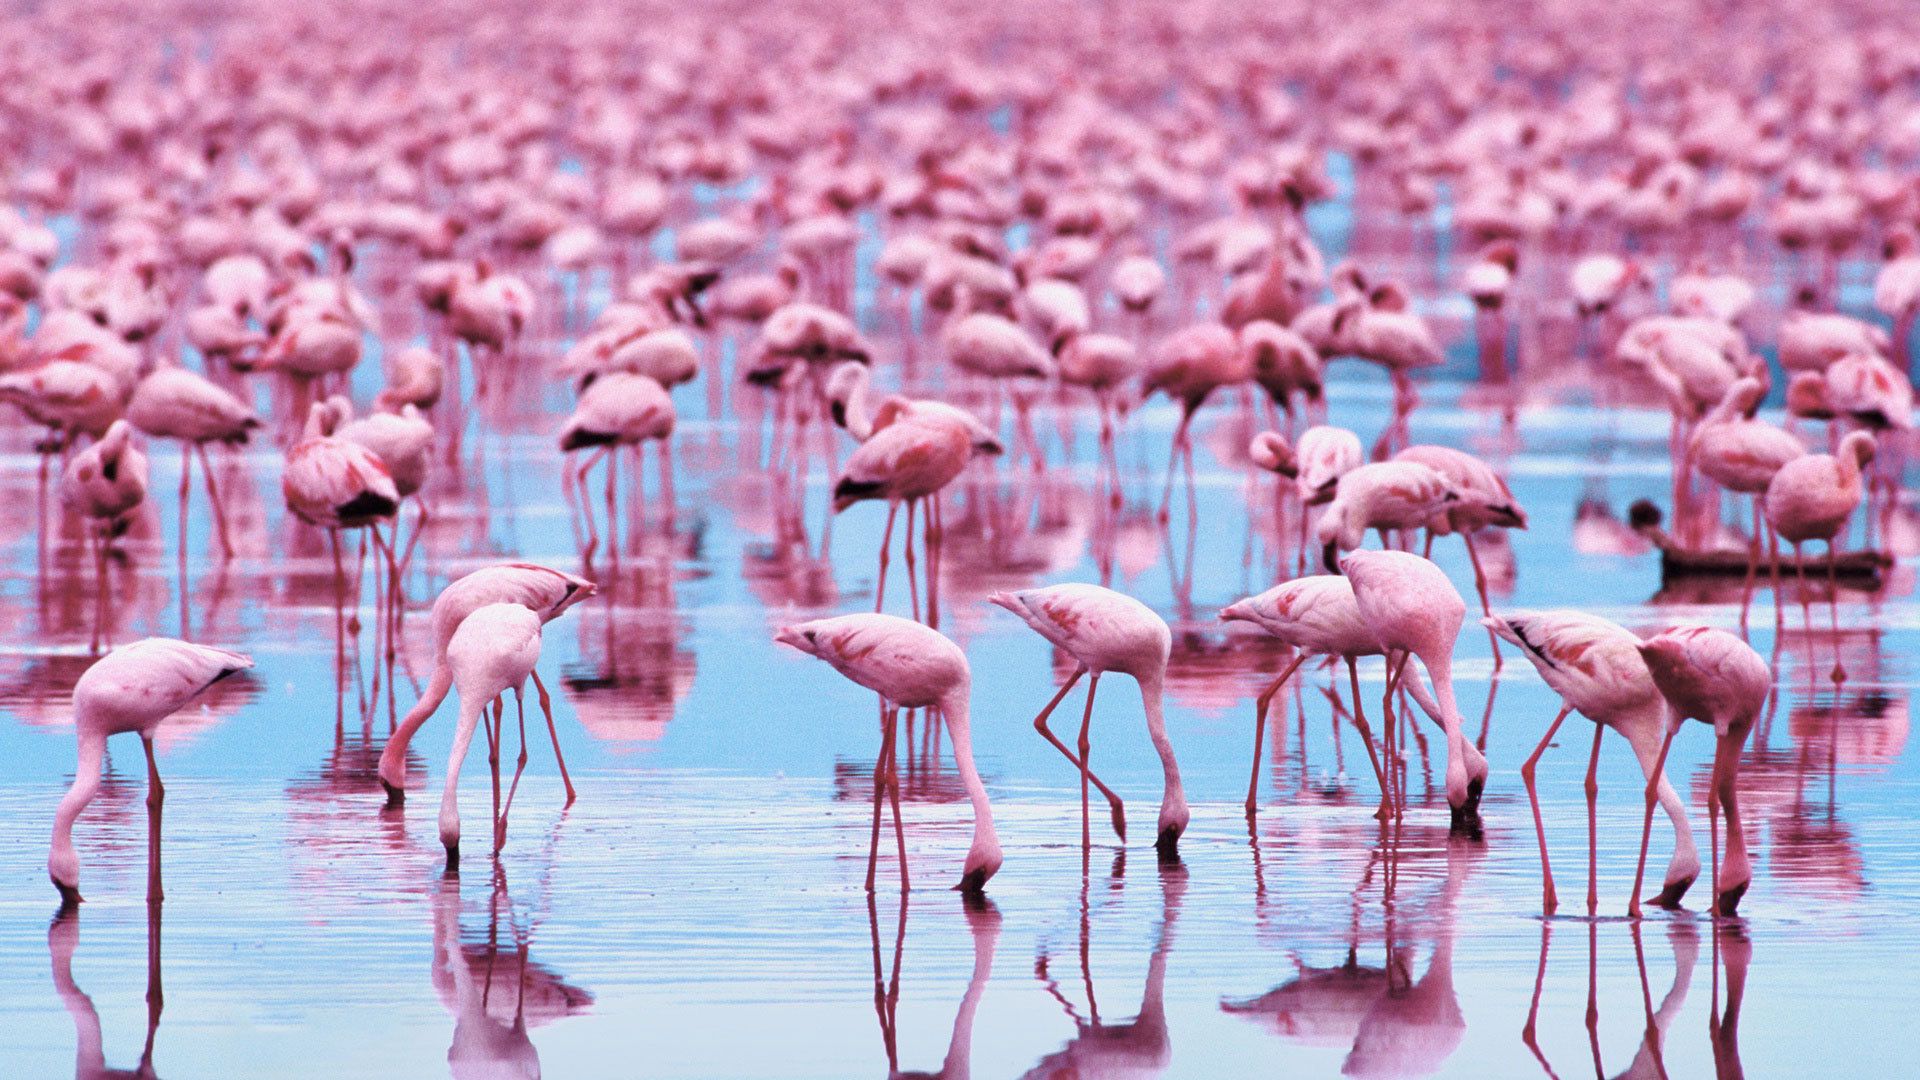  Flamingo Hintergrundbild 1920x1080. Download Flamingo wallpaper for mobile phone, free Flamingo HD picture